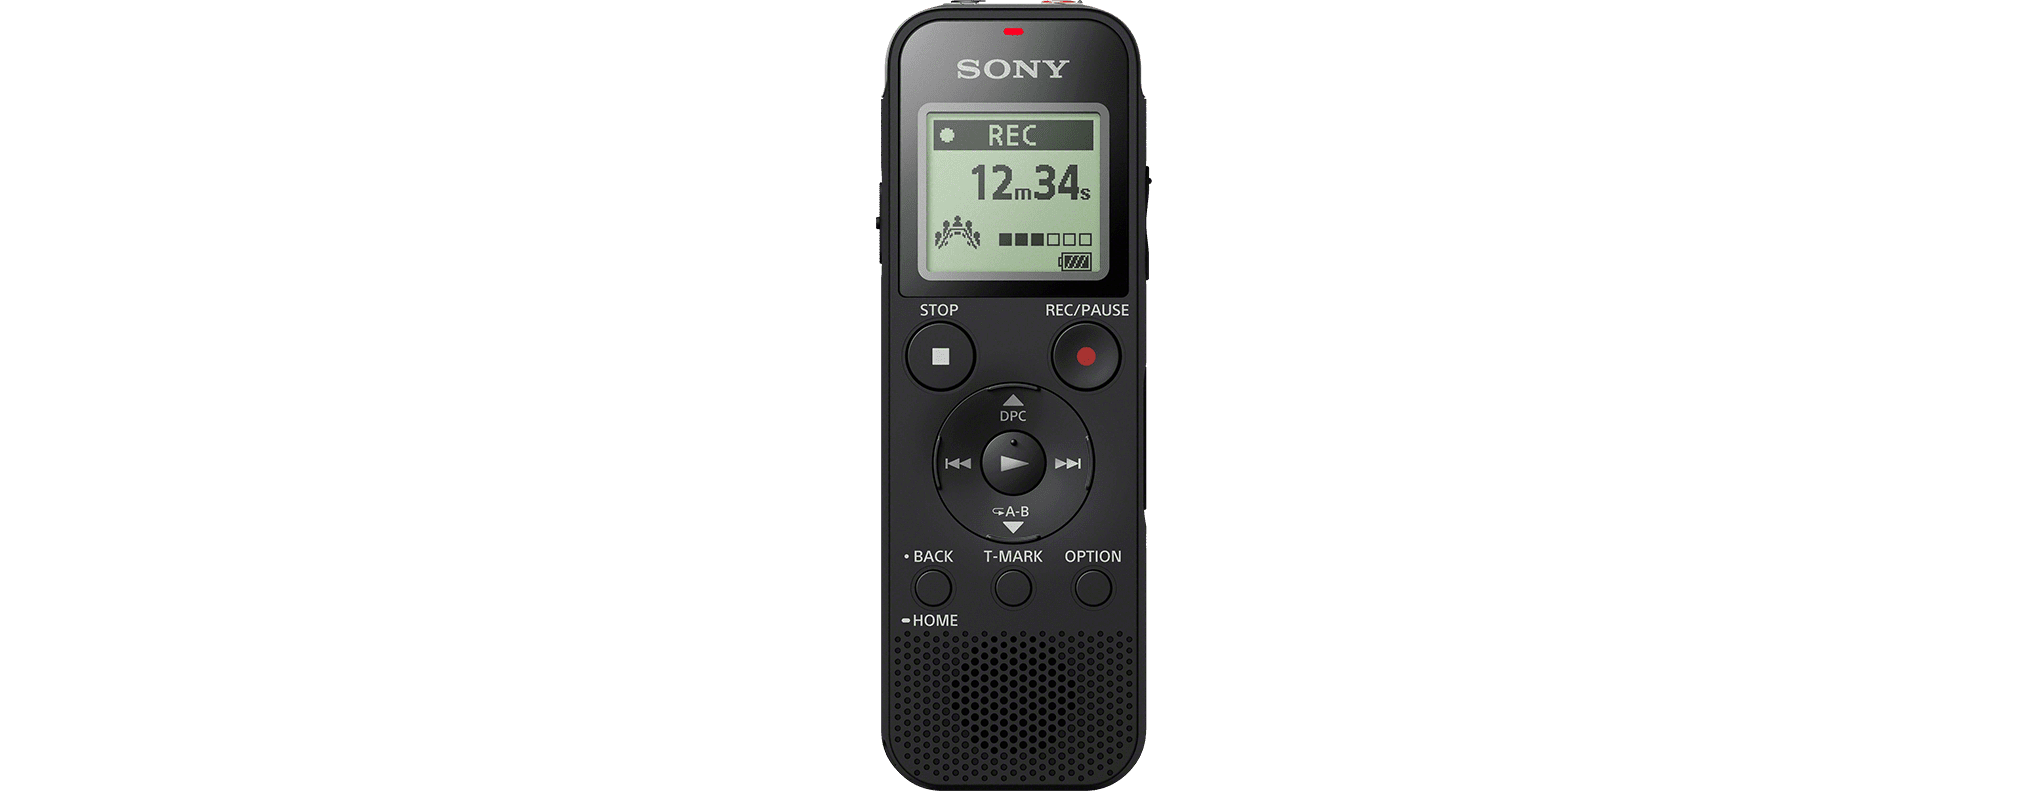 SONY ICD-PX470 Stereo Digital Voice with USB - Walmart.com